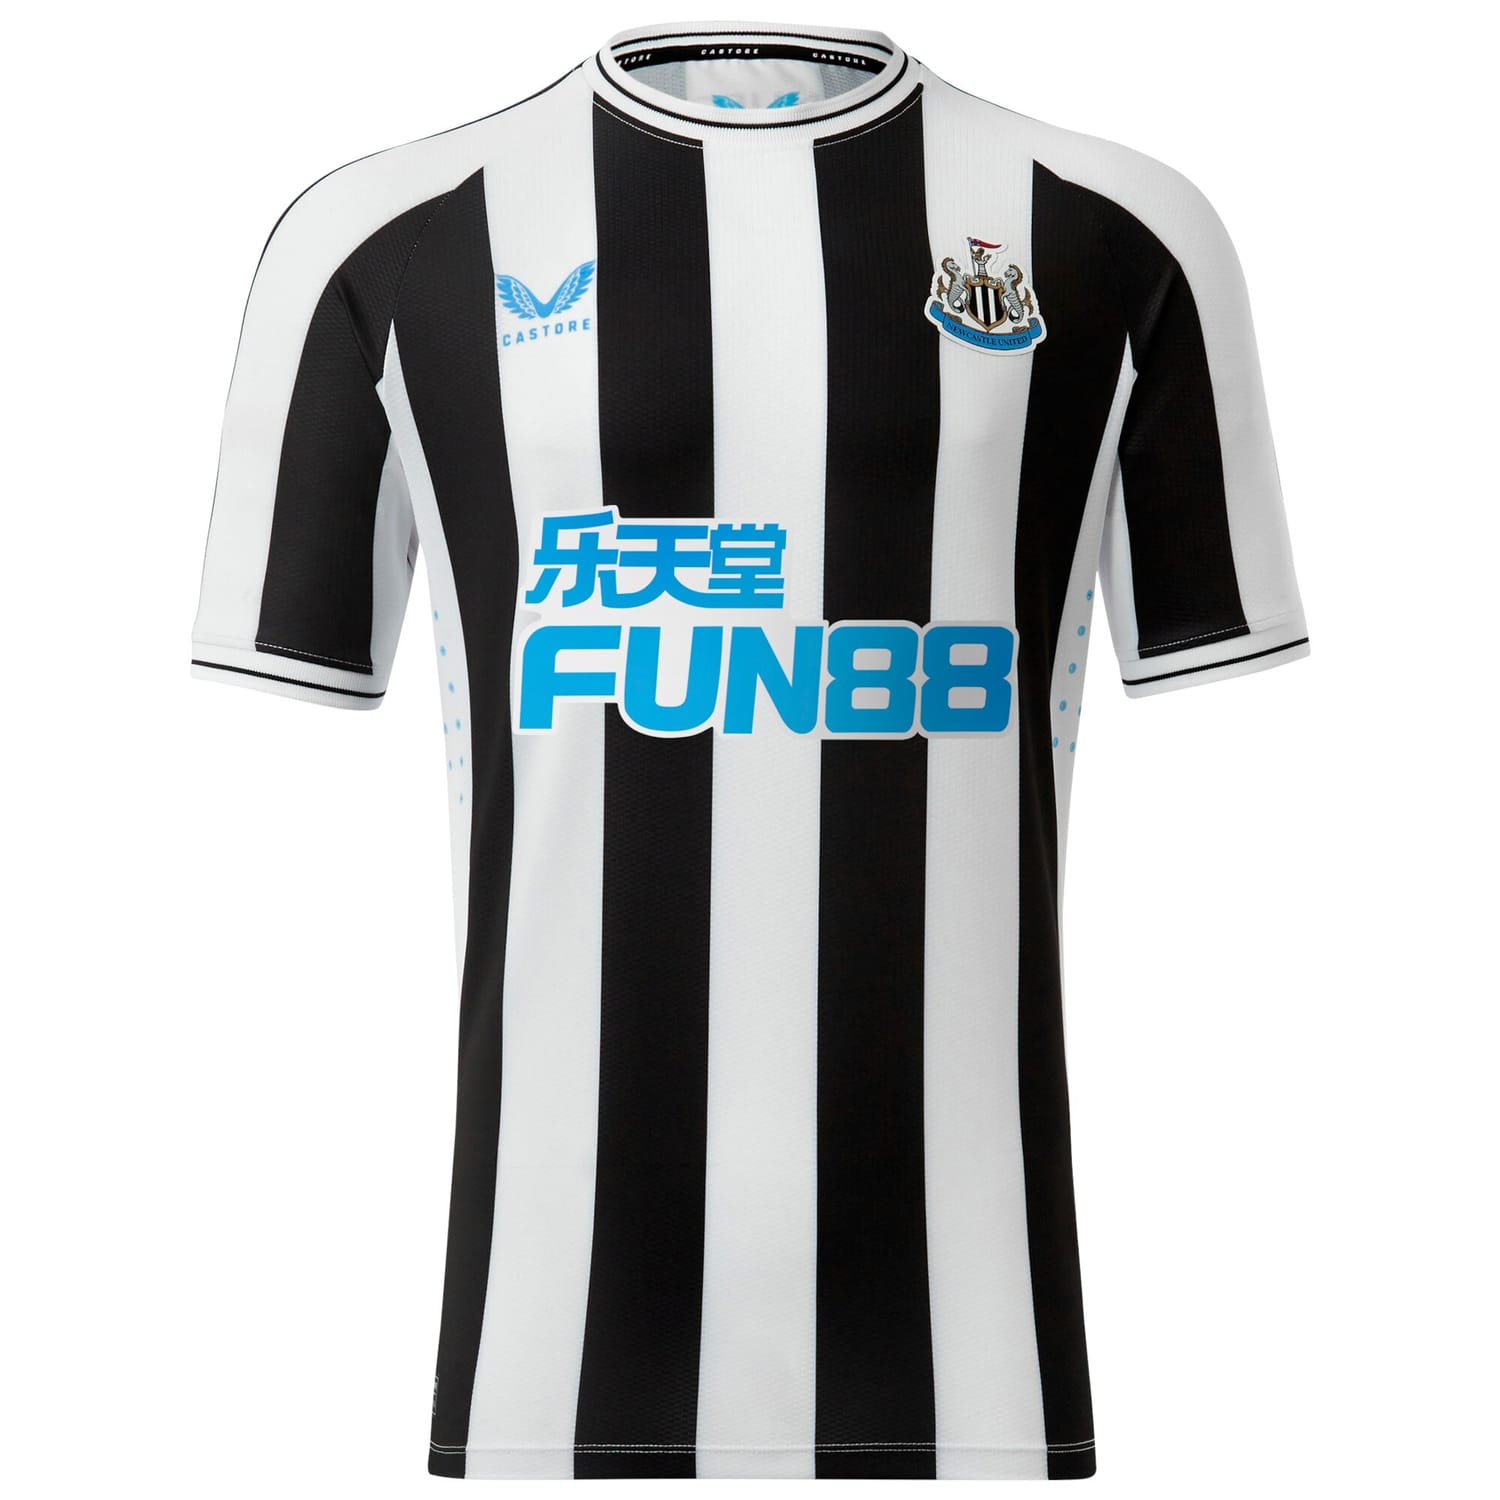 Premier League Newcastle United Home Pro Jersey Shirt 2022-23 player Saint-Maximin 10 printing for Men